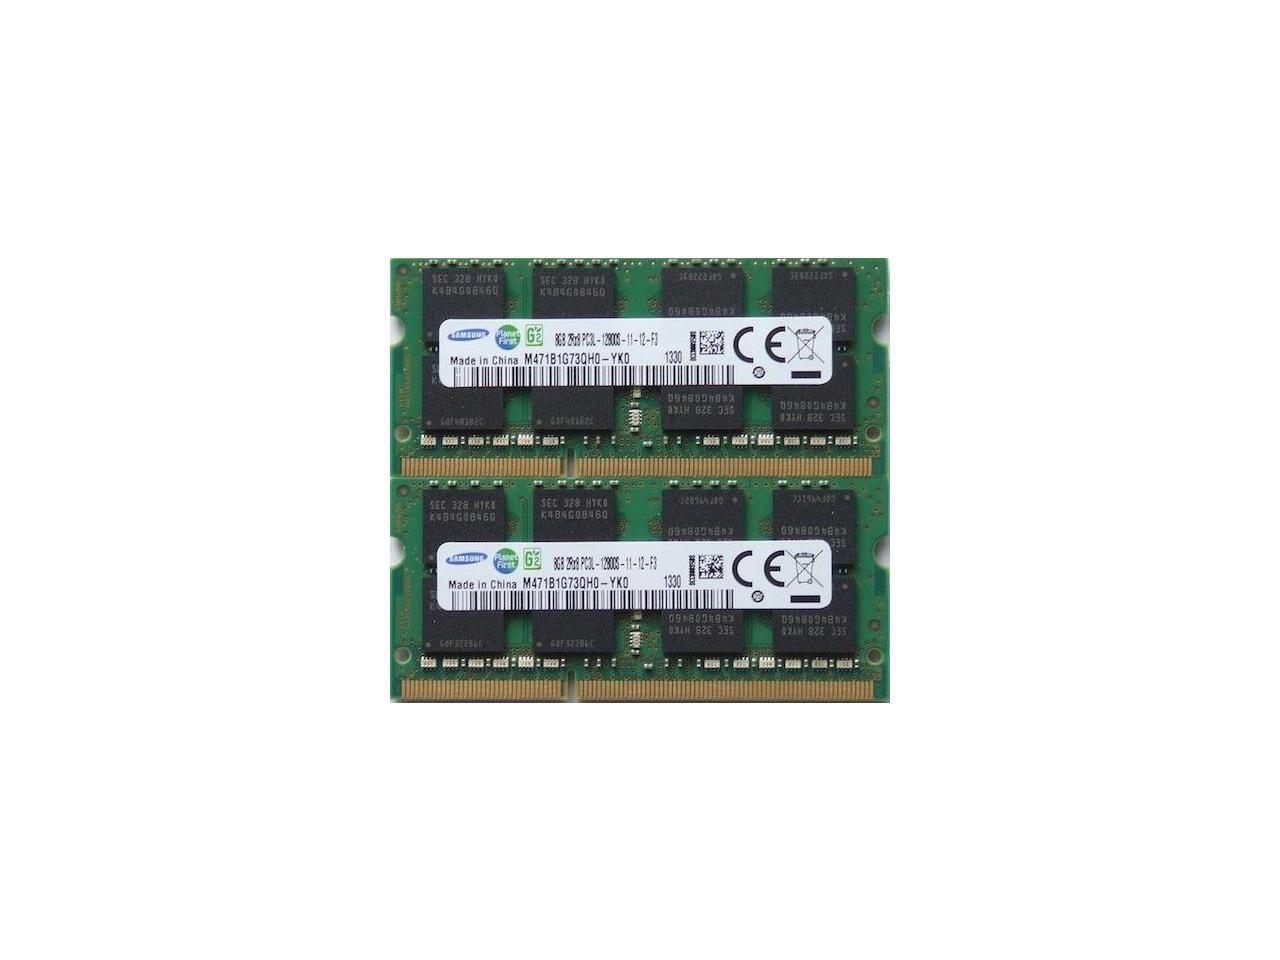 Память ddr3 pc3 12800. Samsung 8gb ddr3l 1600mhz 204-Pin SODIMM Memory Laptop Ram pc3l-12800. Kllisre pc3-12800s-cl11 8gb.